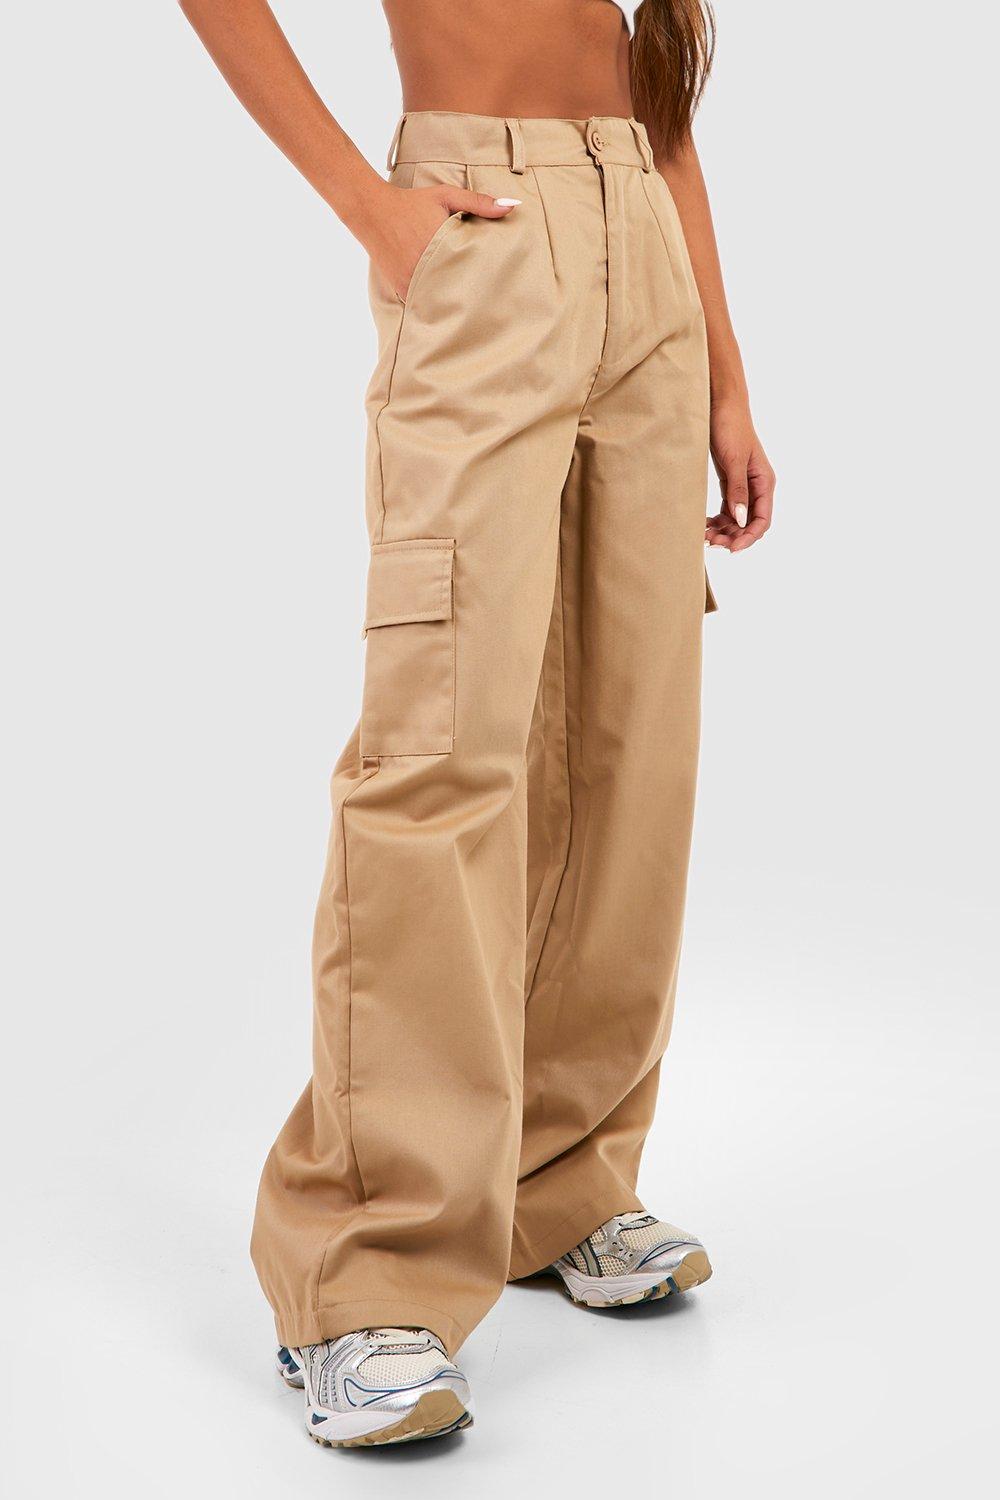 https://media.boohoo.com/i/boohoo/gzz44884_olive_xl_3/female-olive-high-waisted-straight-fit-cargo-pants